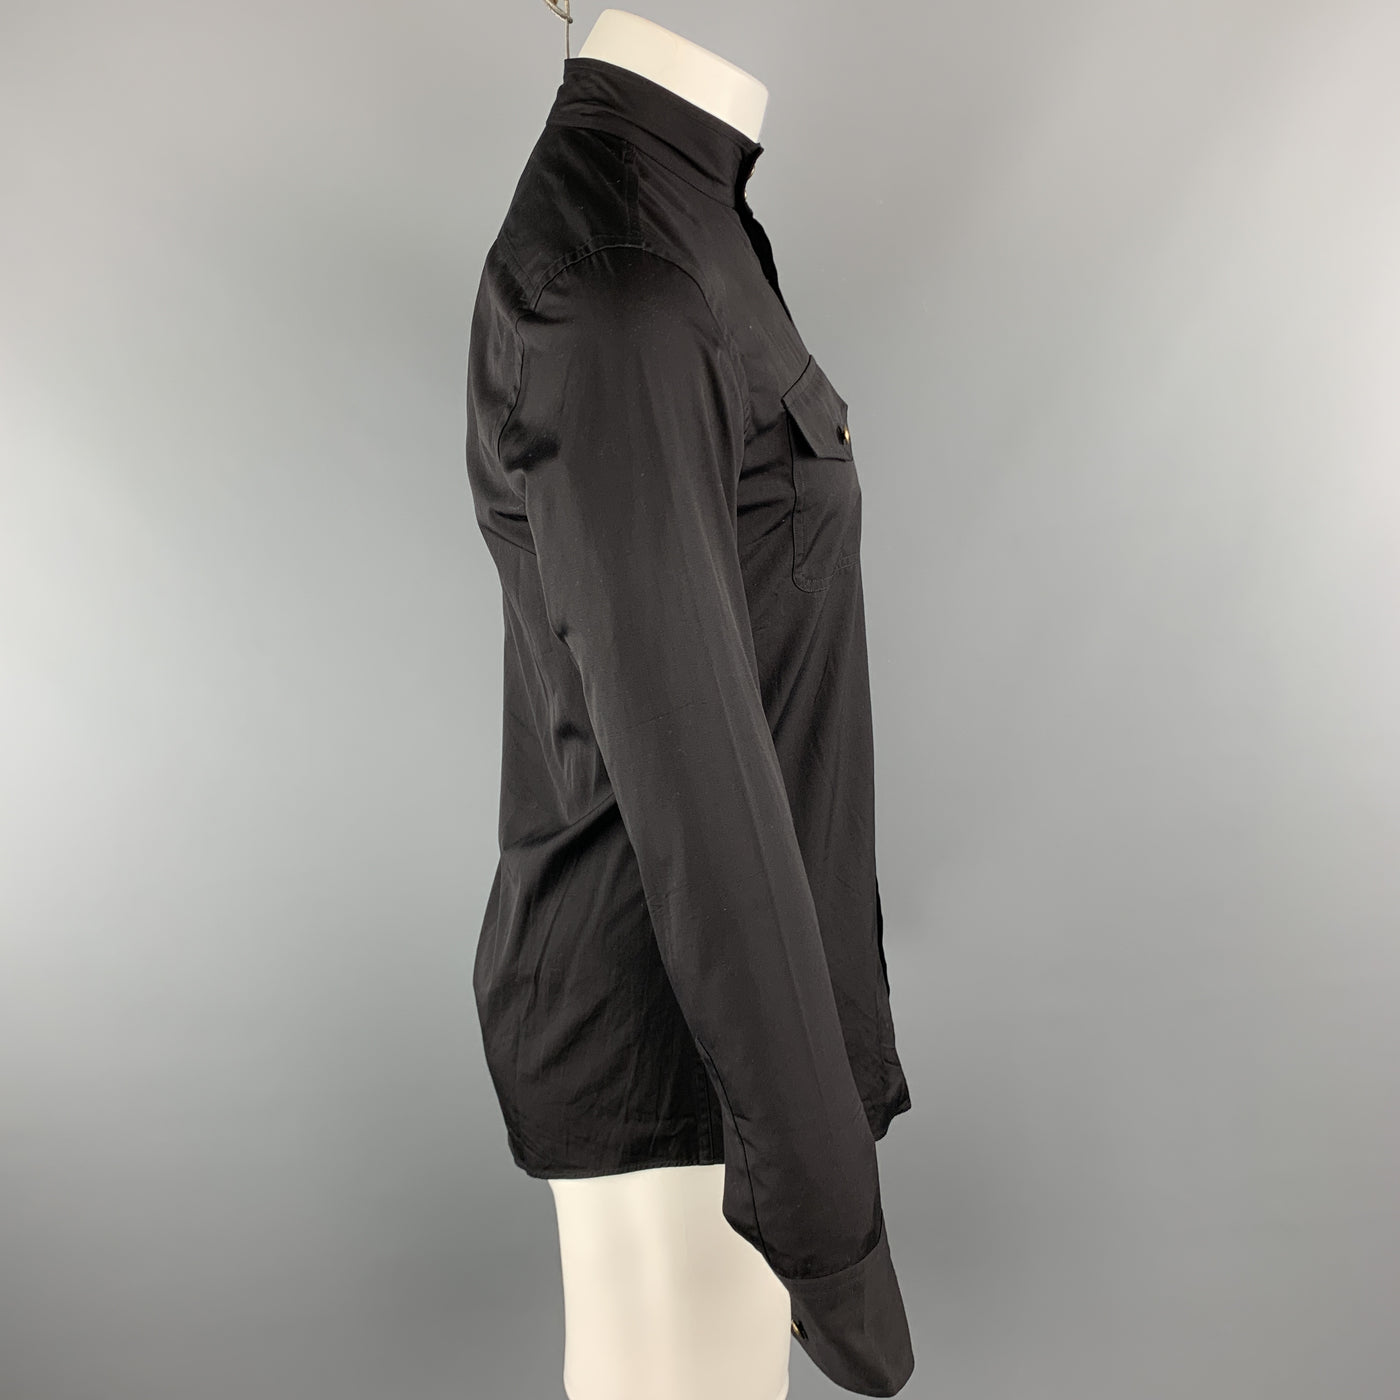 GUCCI Size S Black Solid Cotton Nehru Collar Long Sleeve Shirt